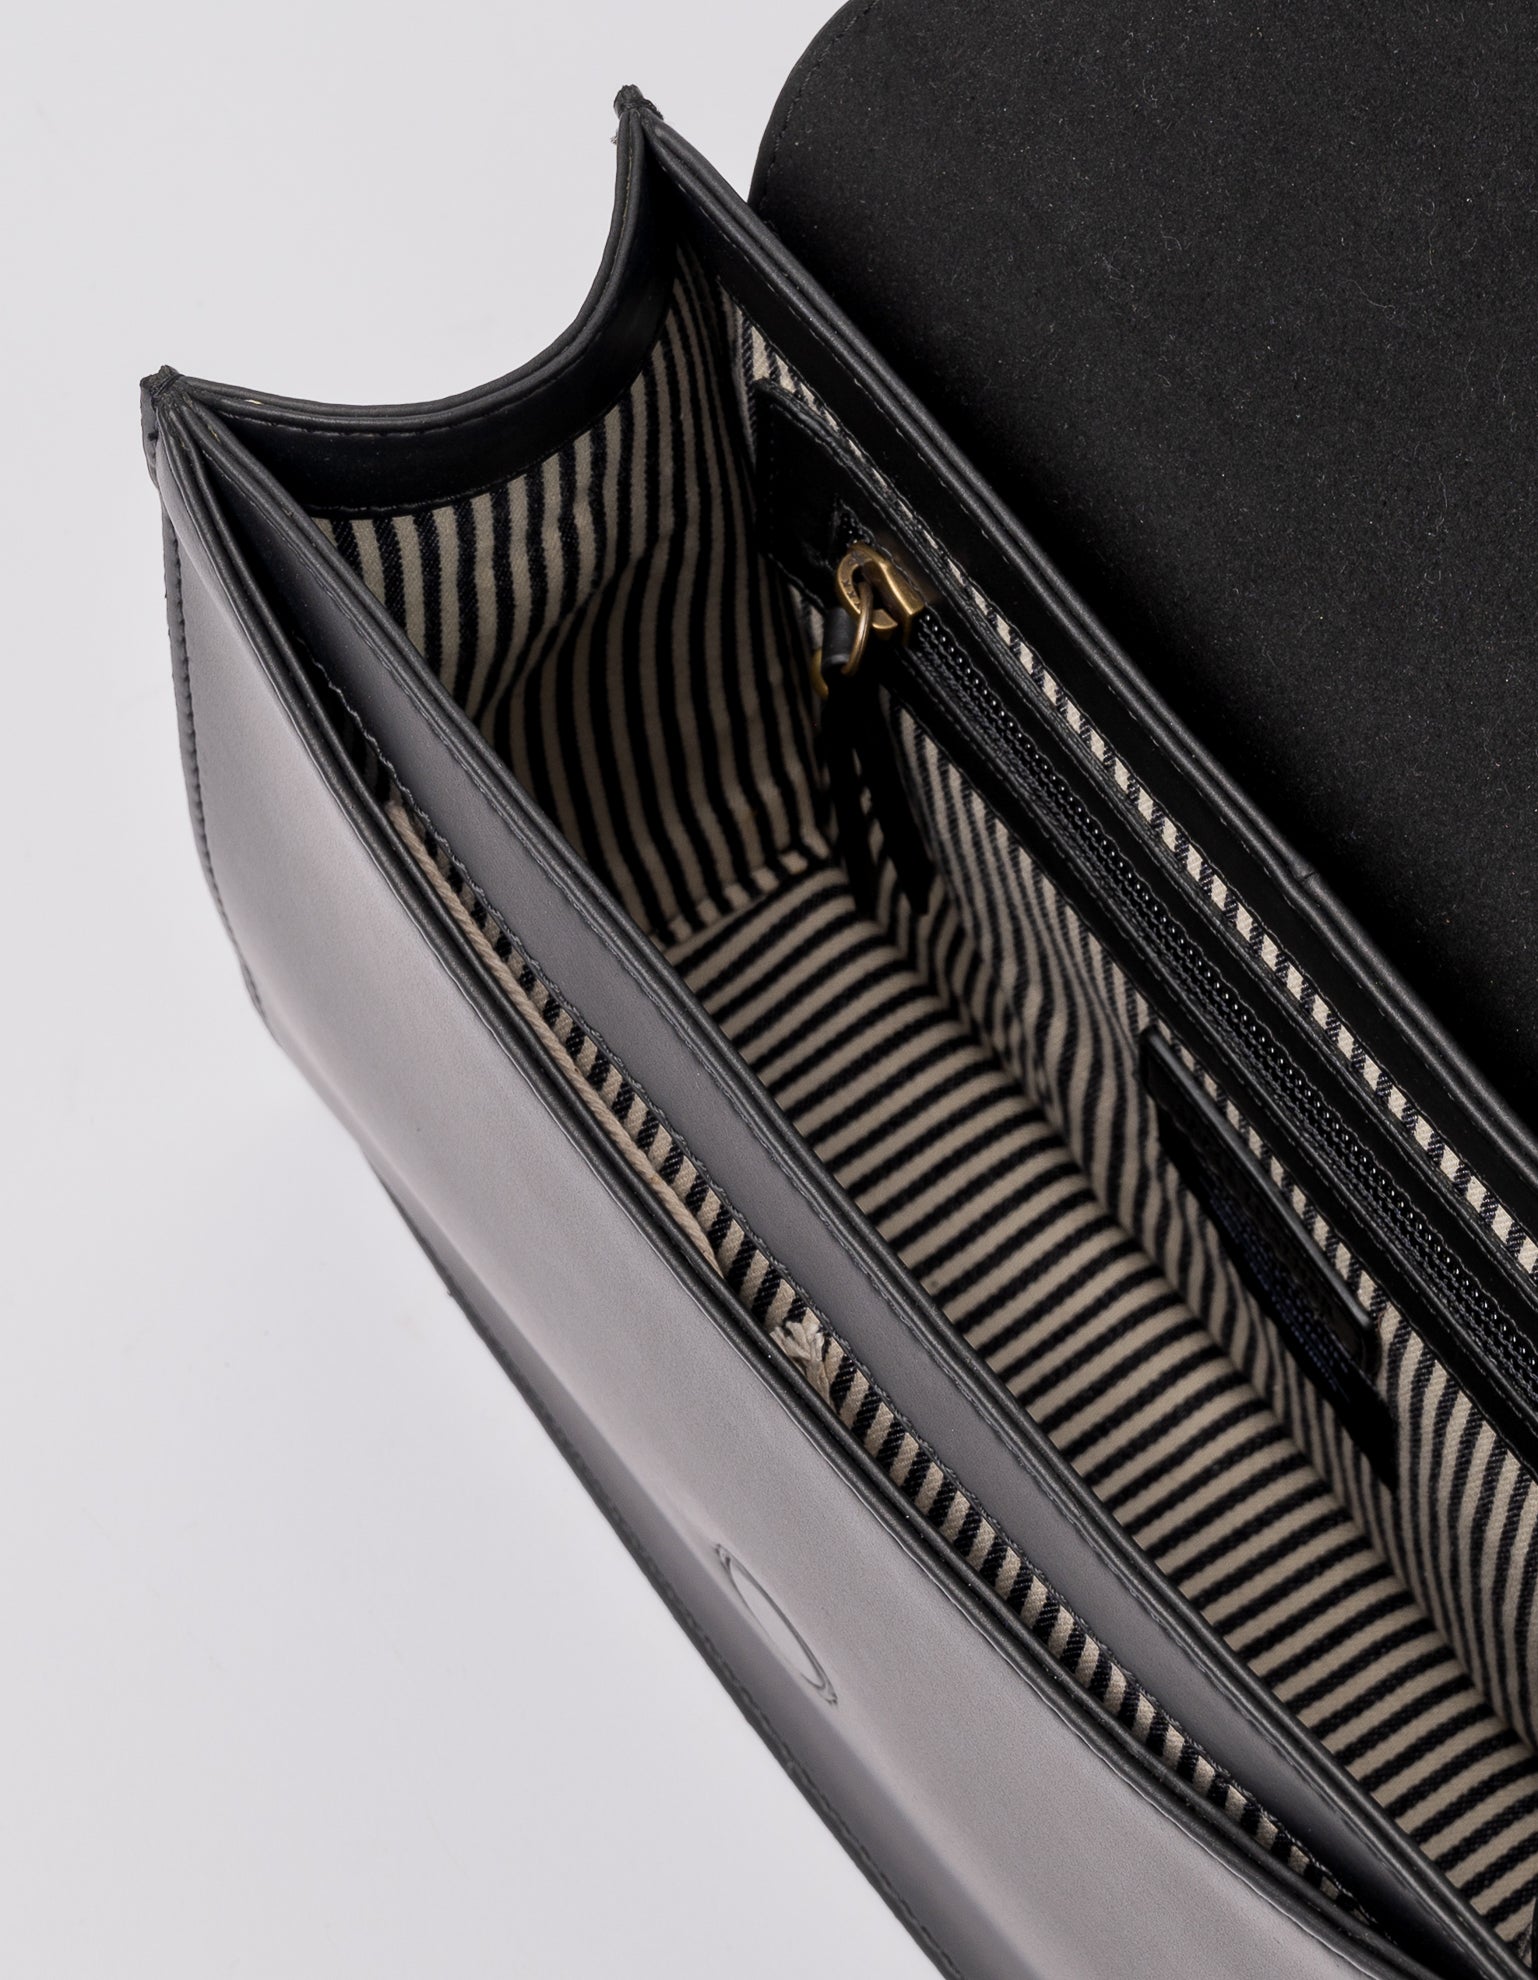 Apple leather Audrey bag in black, inside product image